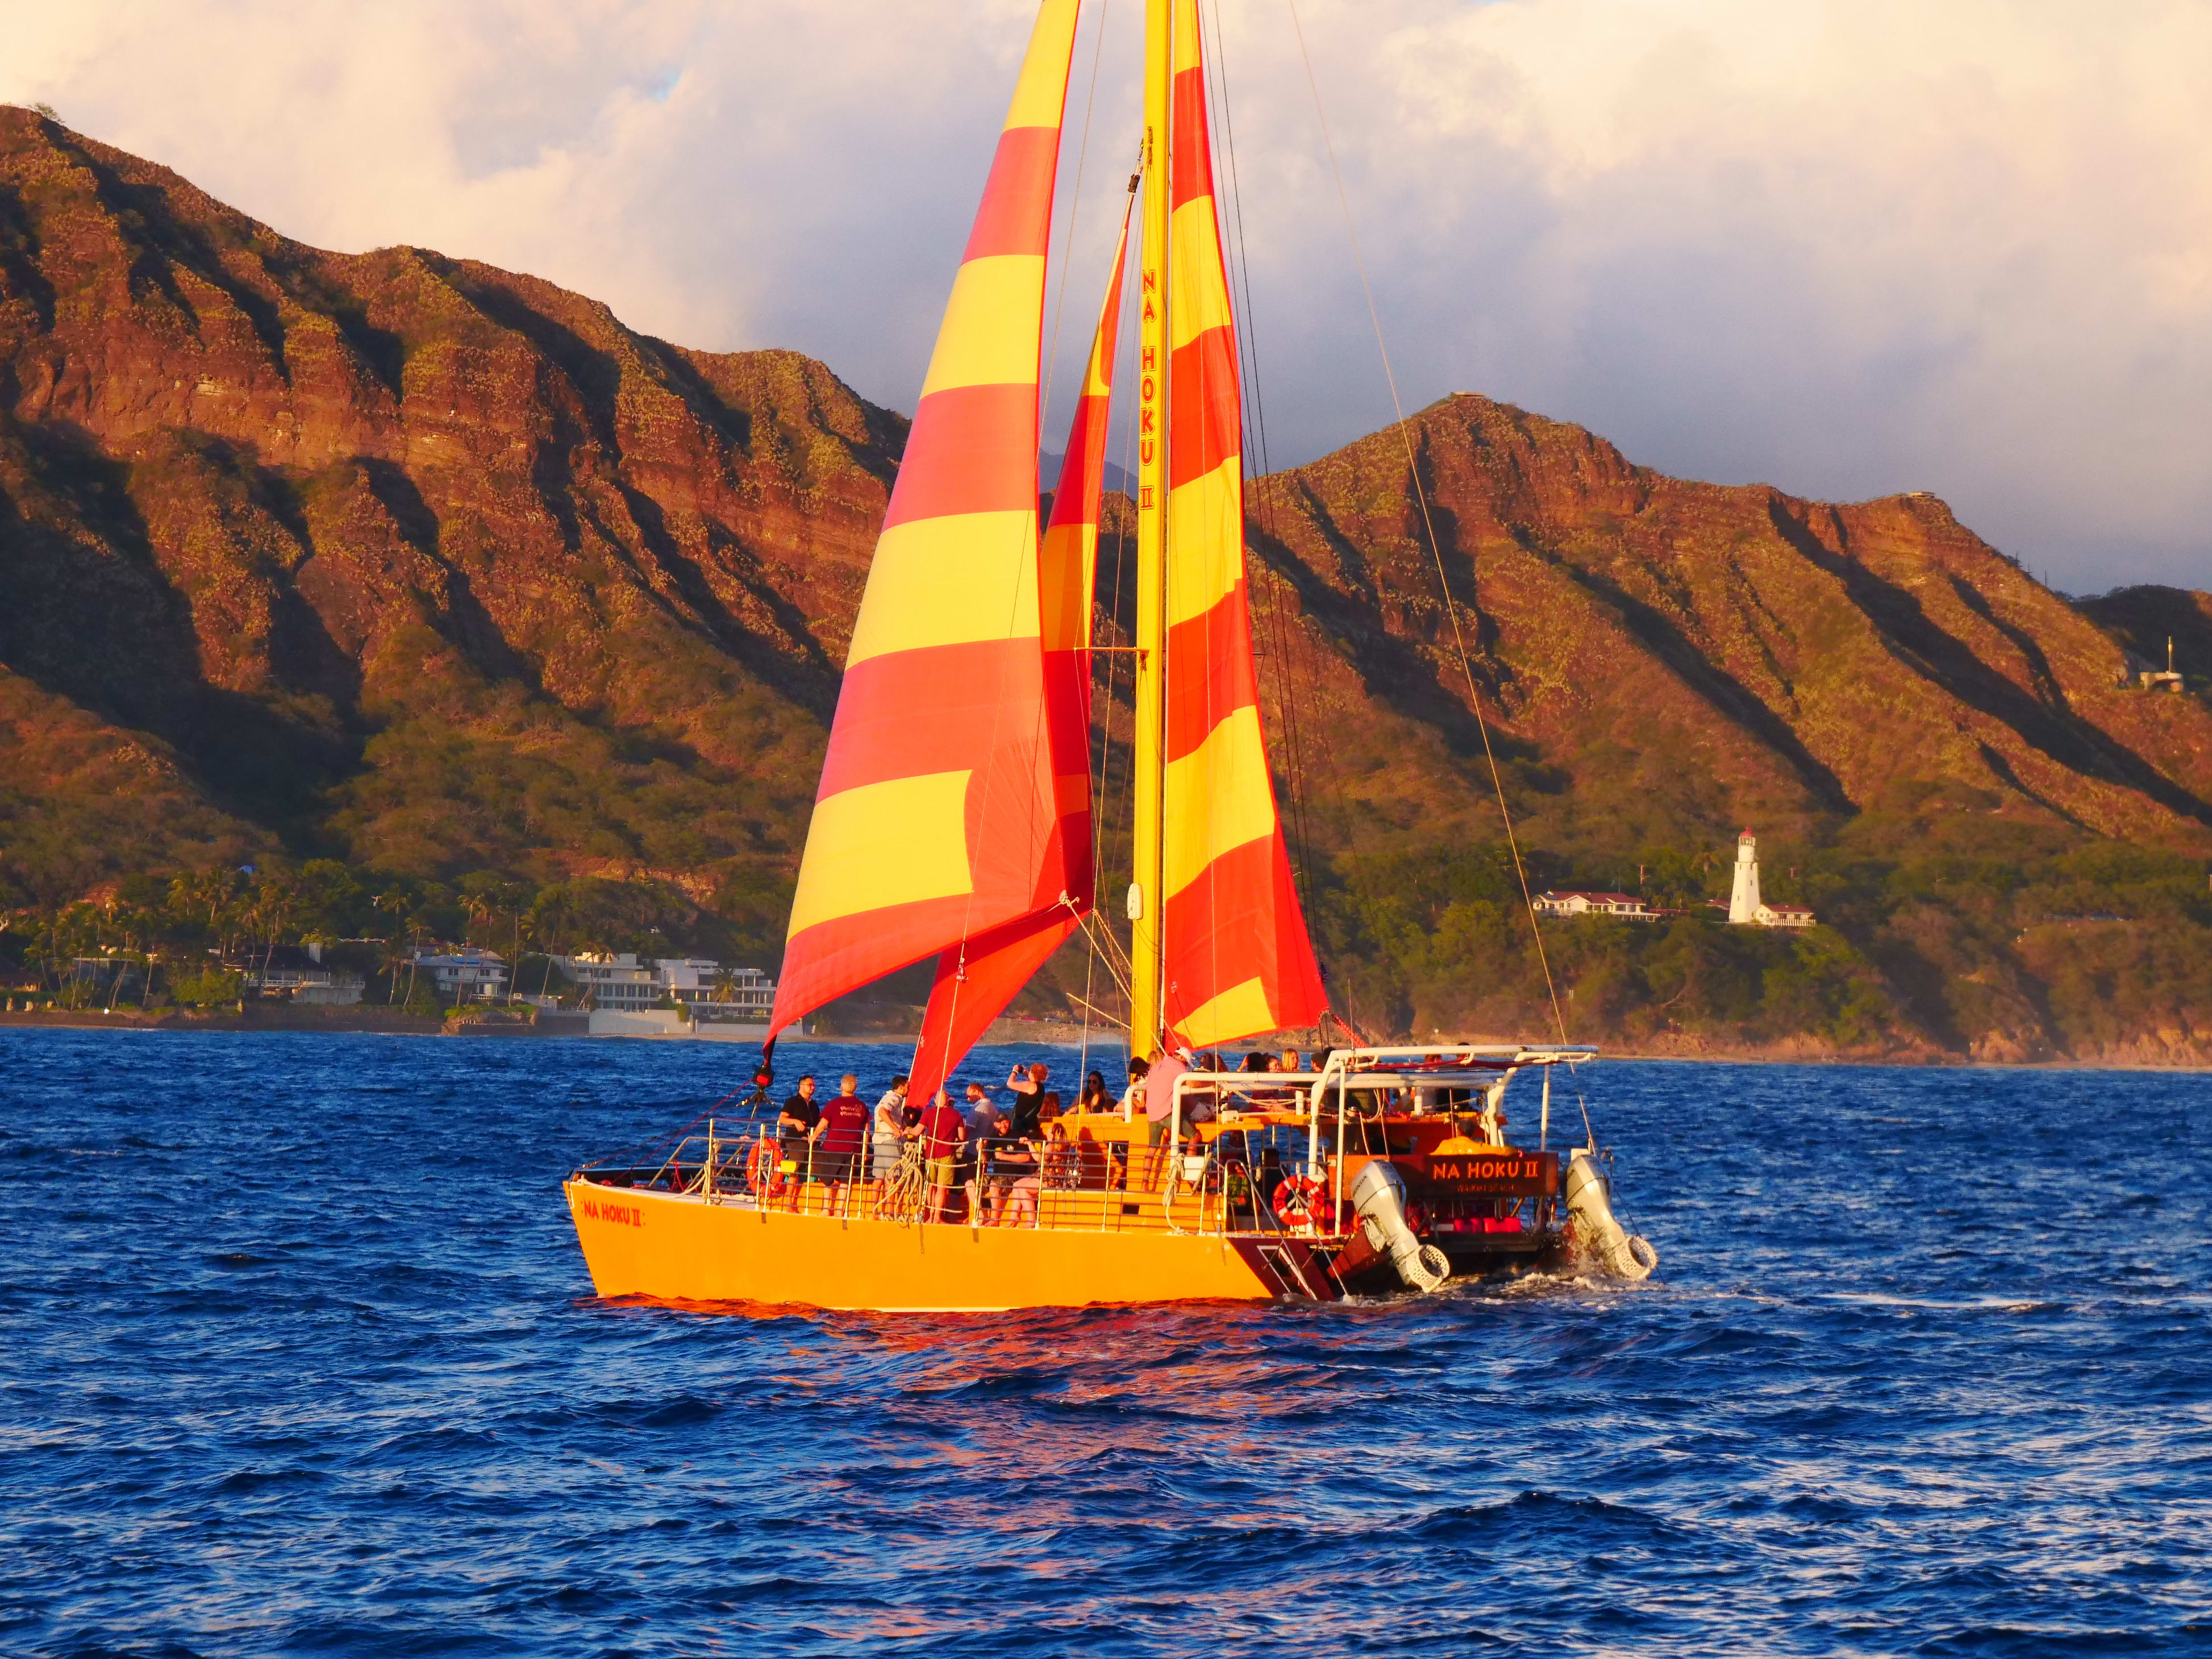 Na Hoku Ii Catamaran Private Daytime Booze Cruise With Open Bar Open Now Tours Activities Fun Things To Do In Oahu Hawaii Veltra